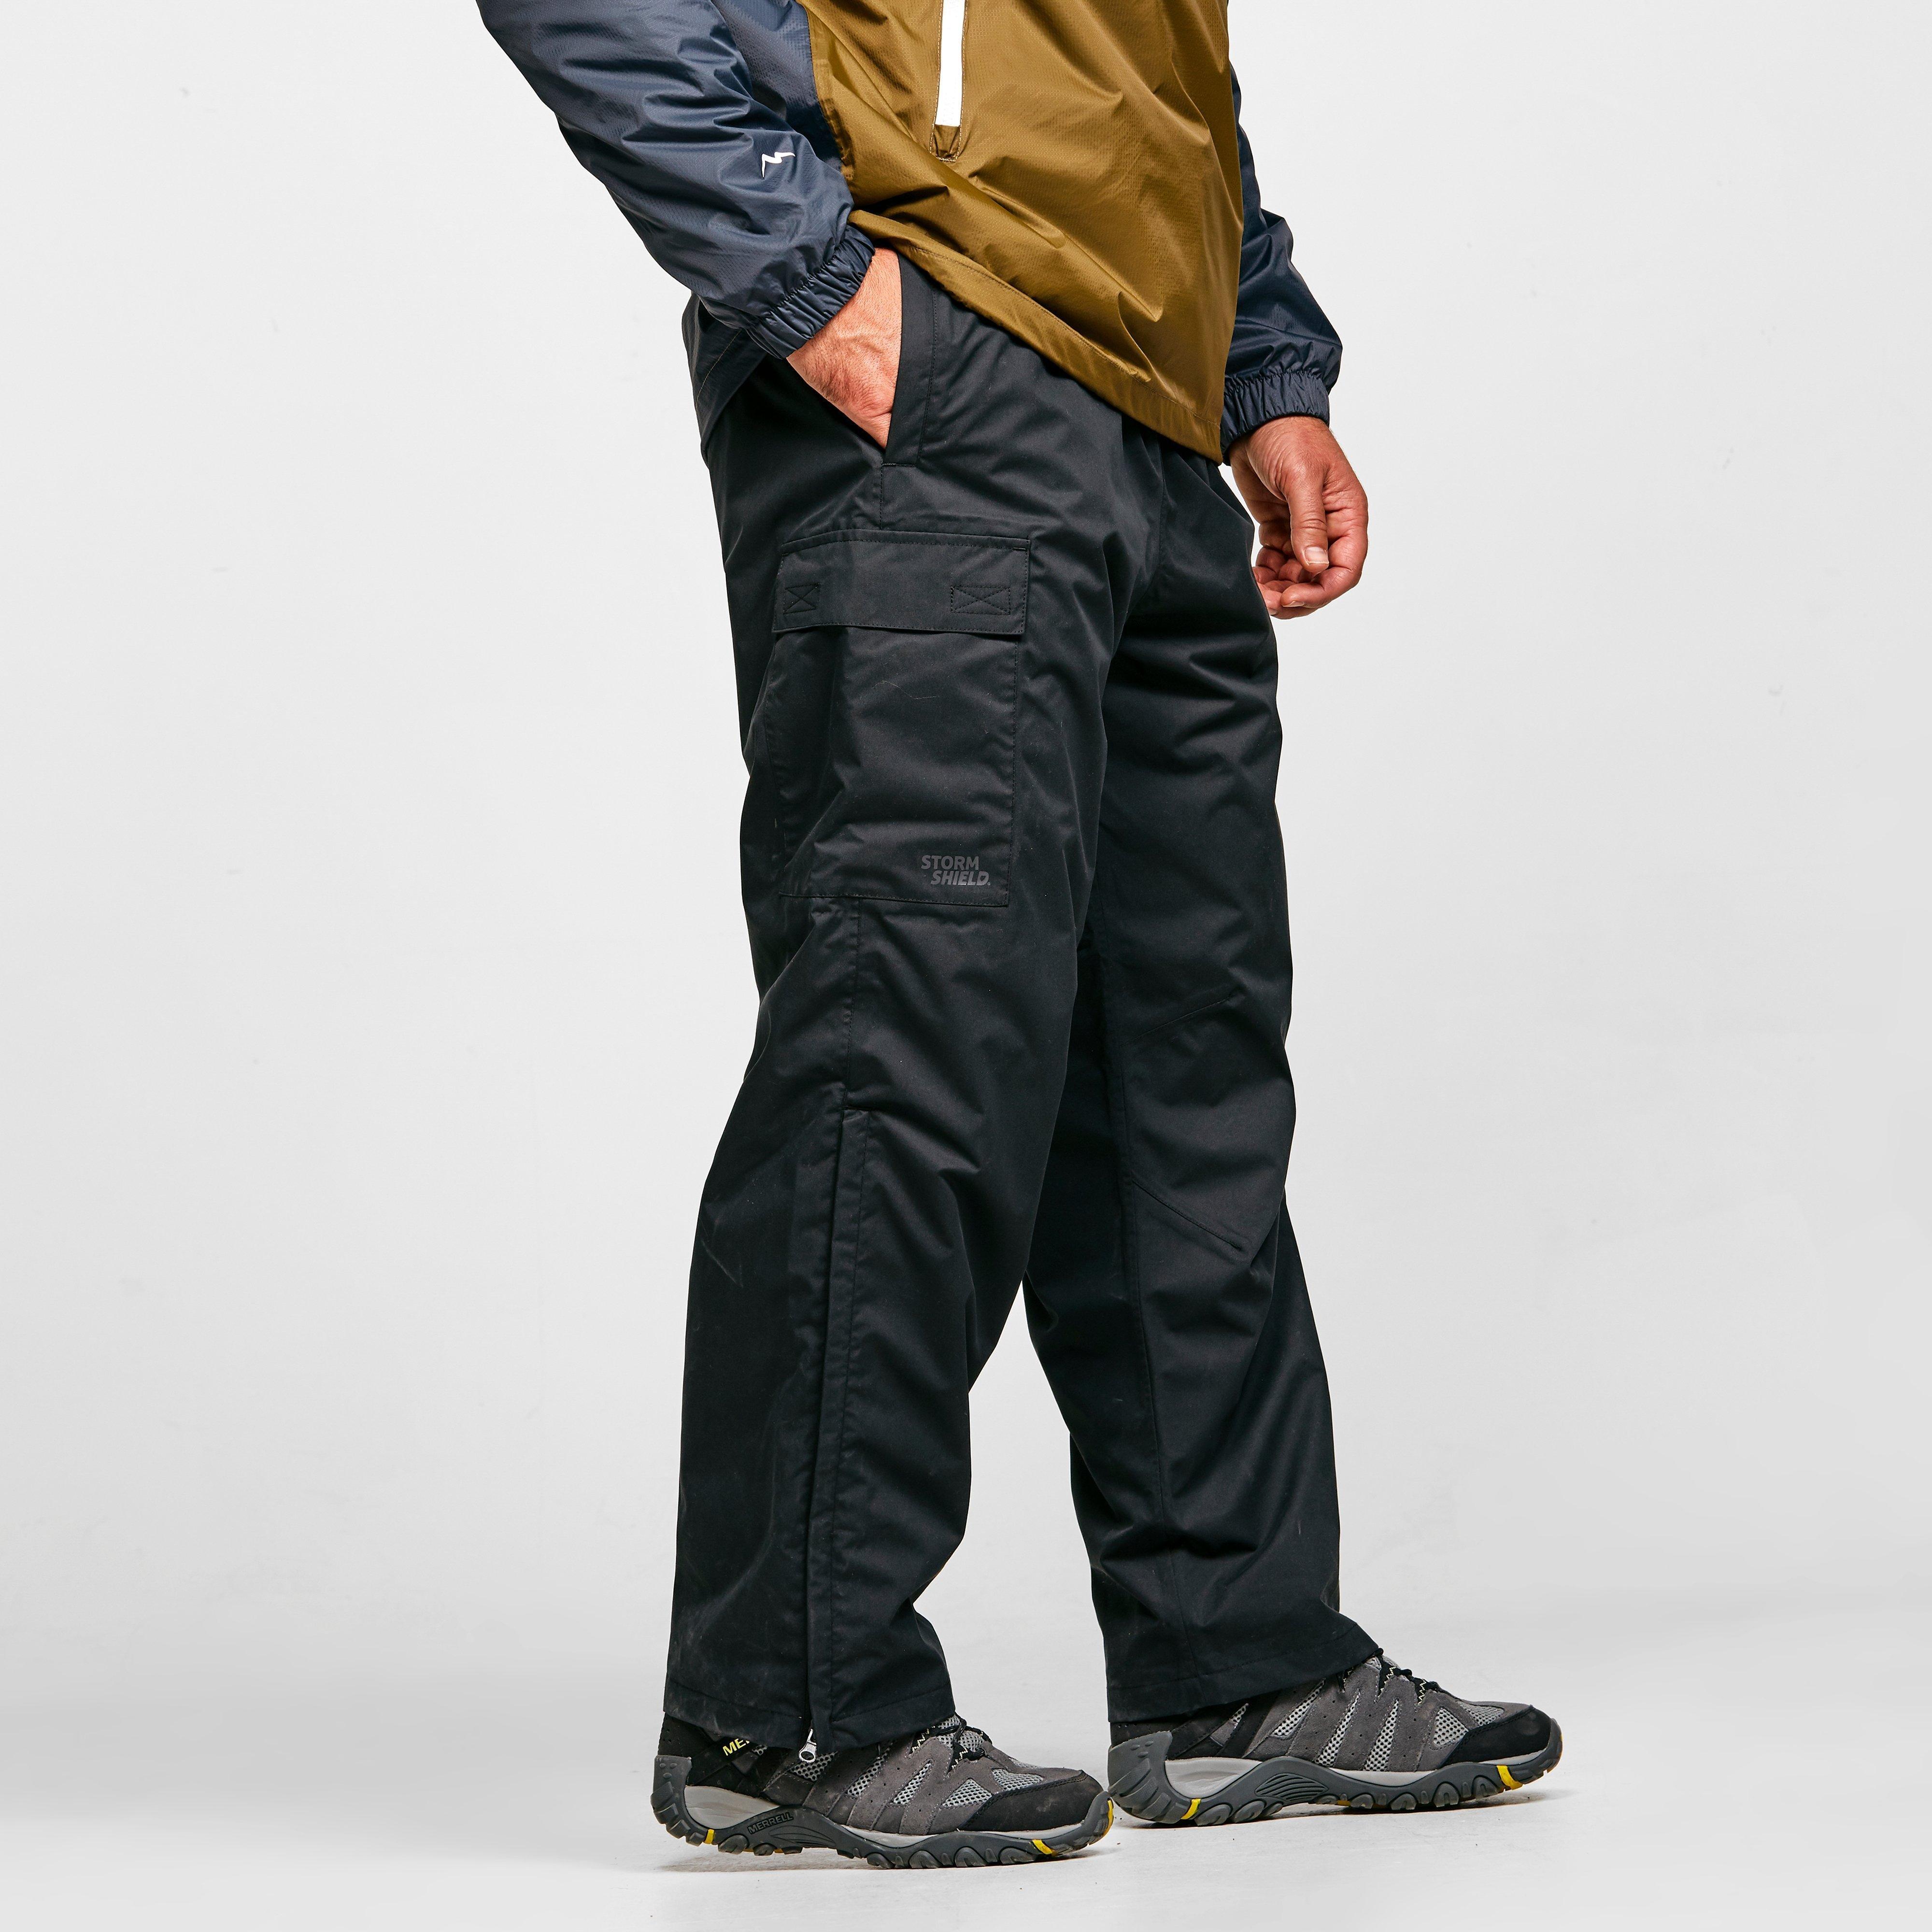 Peter Storm Mens Insulated Waterproof Trousers - Black/blk  Black/blk